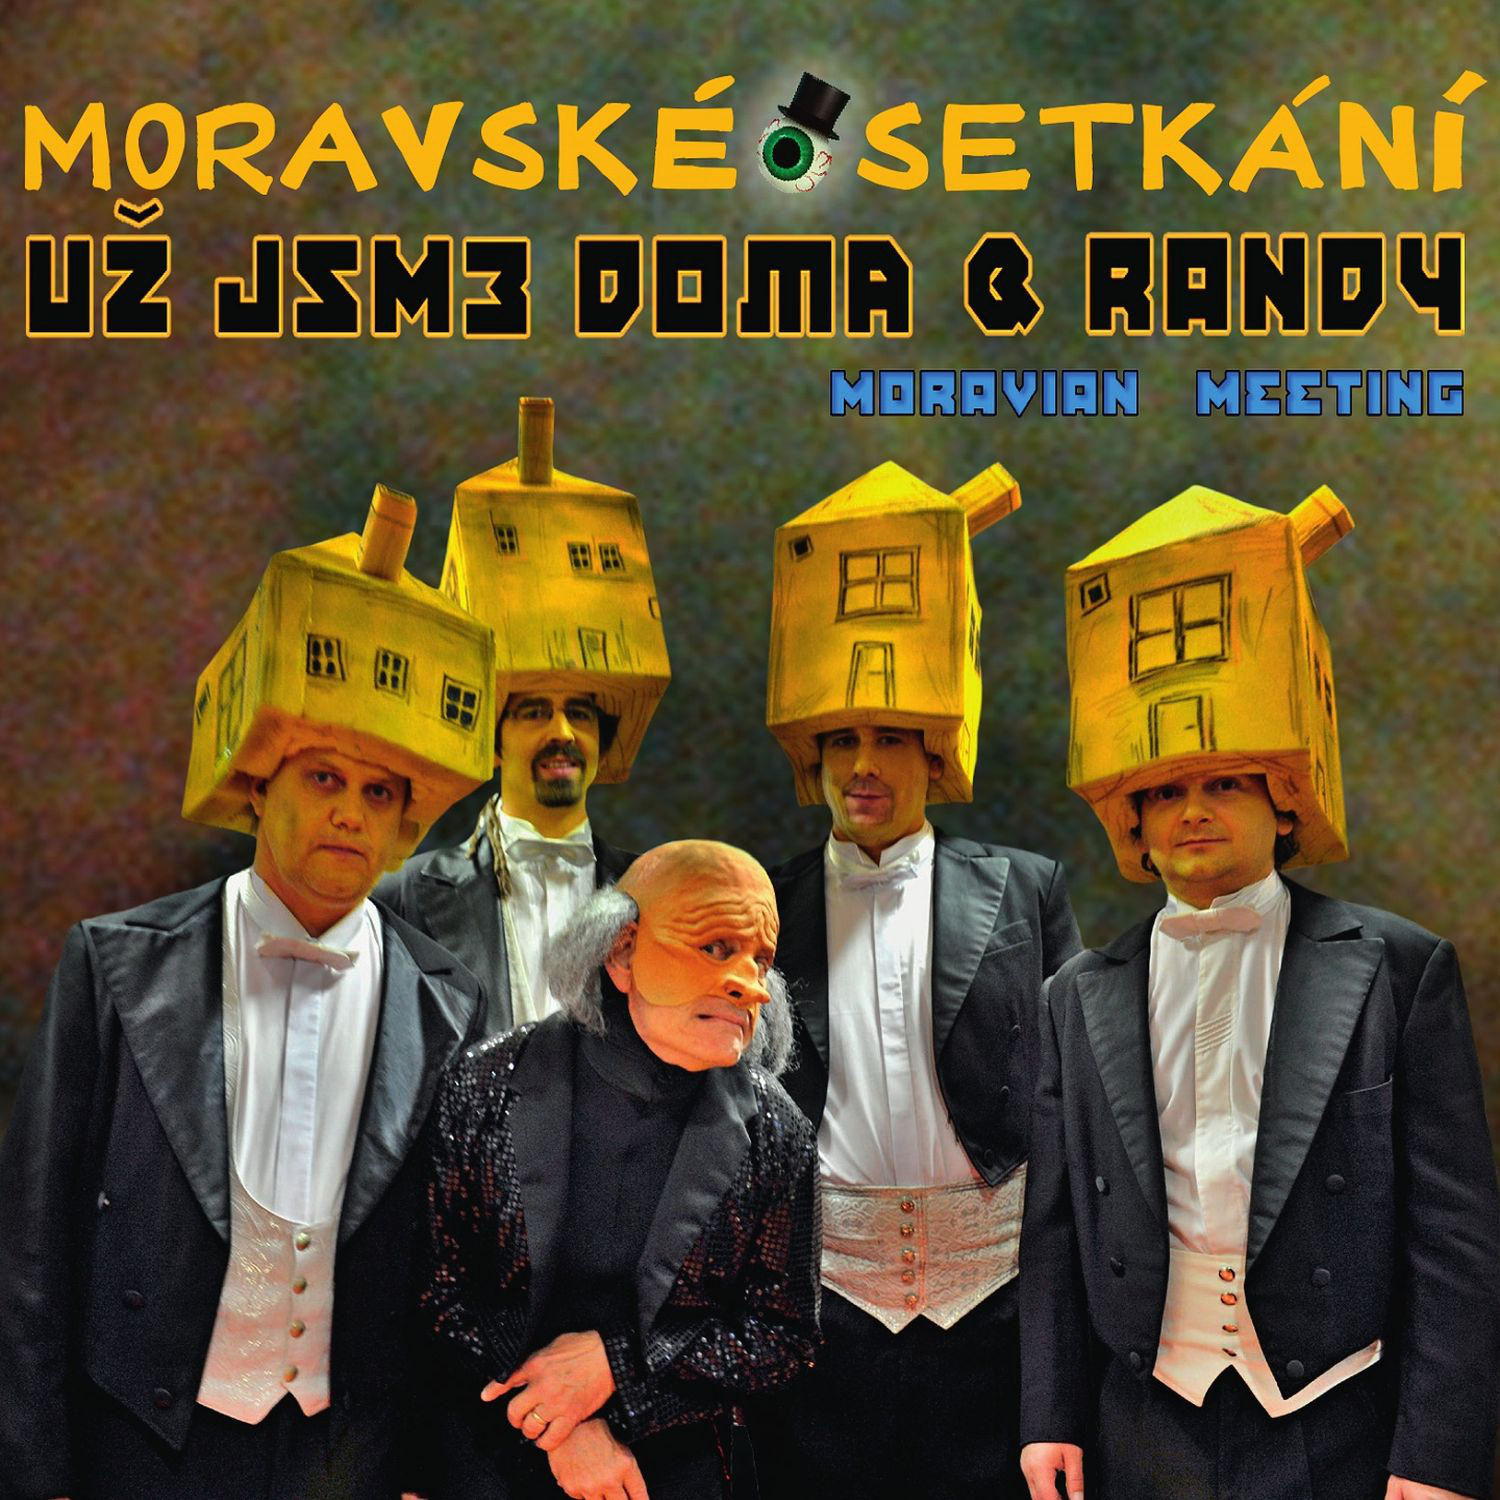 CD Shop - UZ JSME DOMA & RANDY MORAVSKE SETKANI